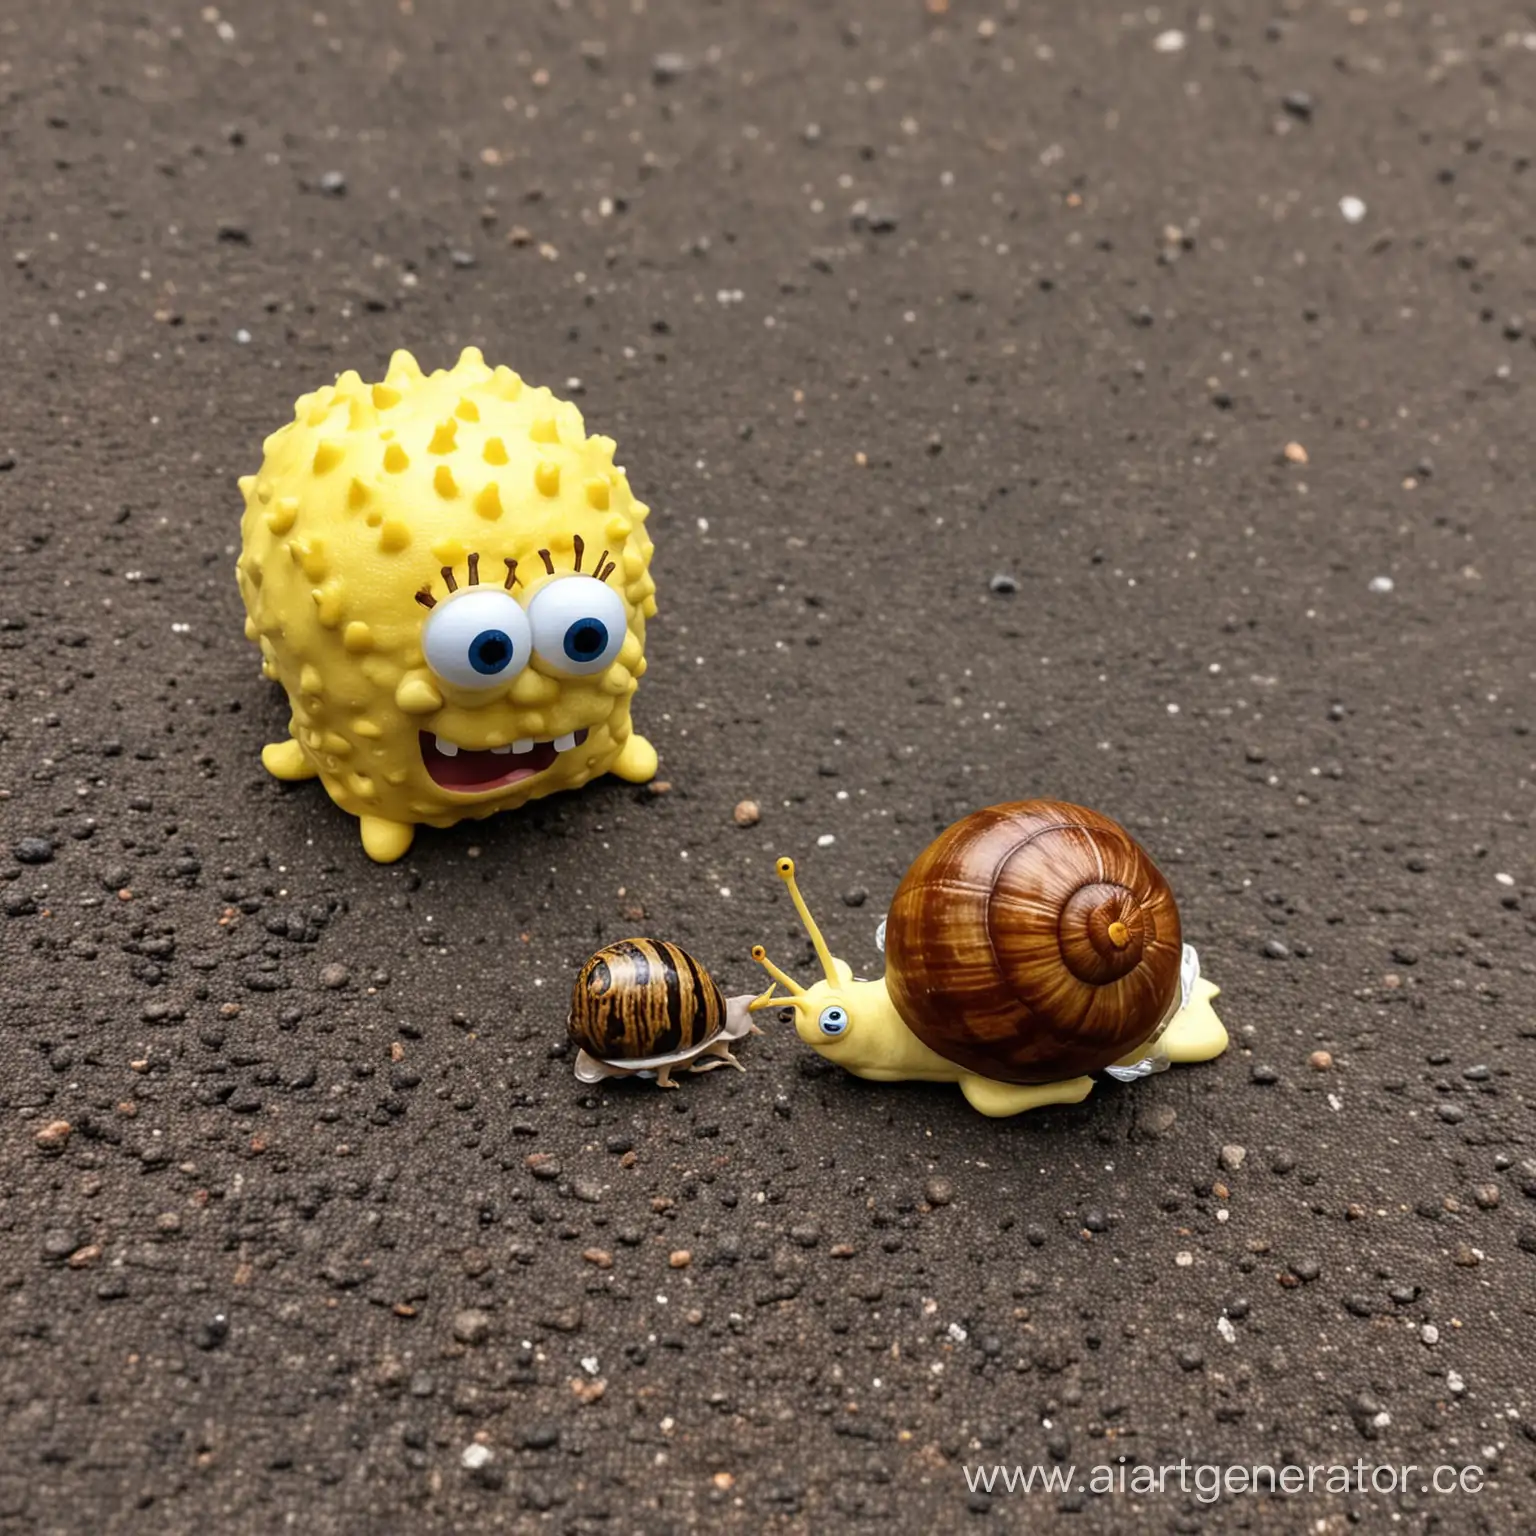 SpongeBob-SquarePants-and-His-Beloved-Pet-Snail-Gary